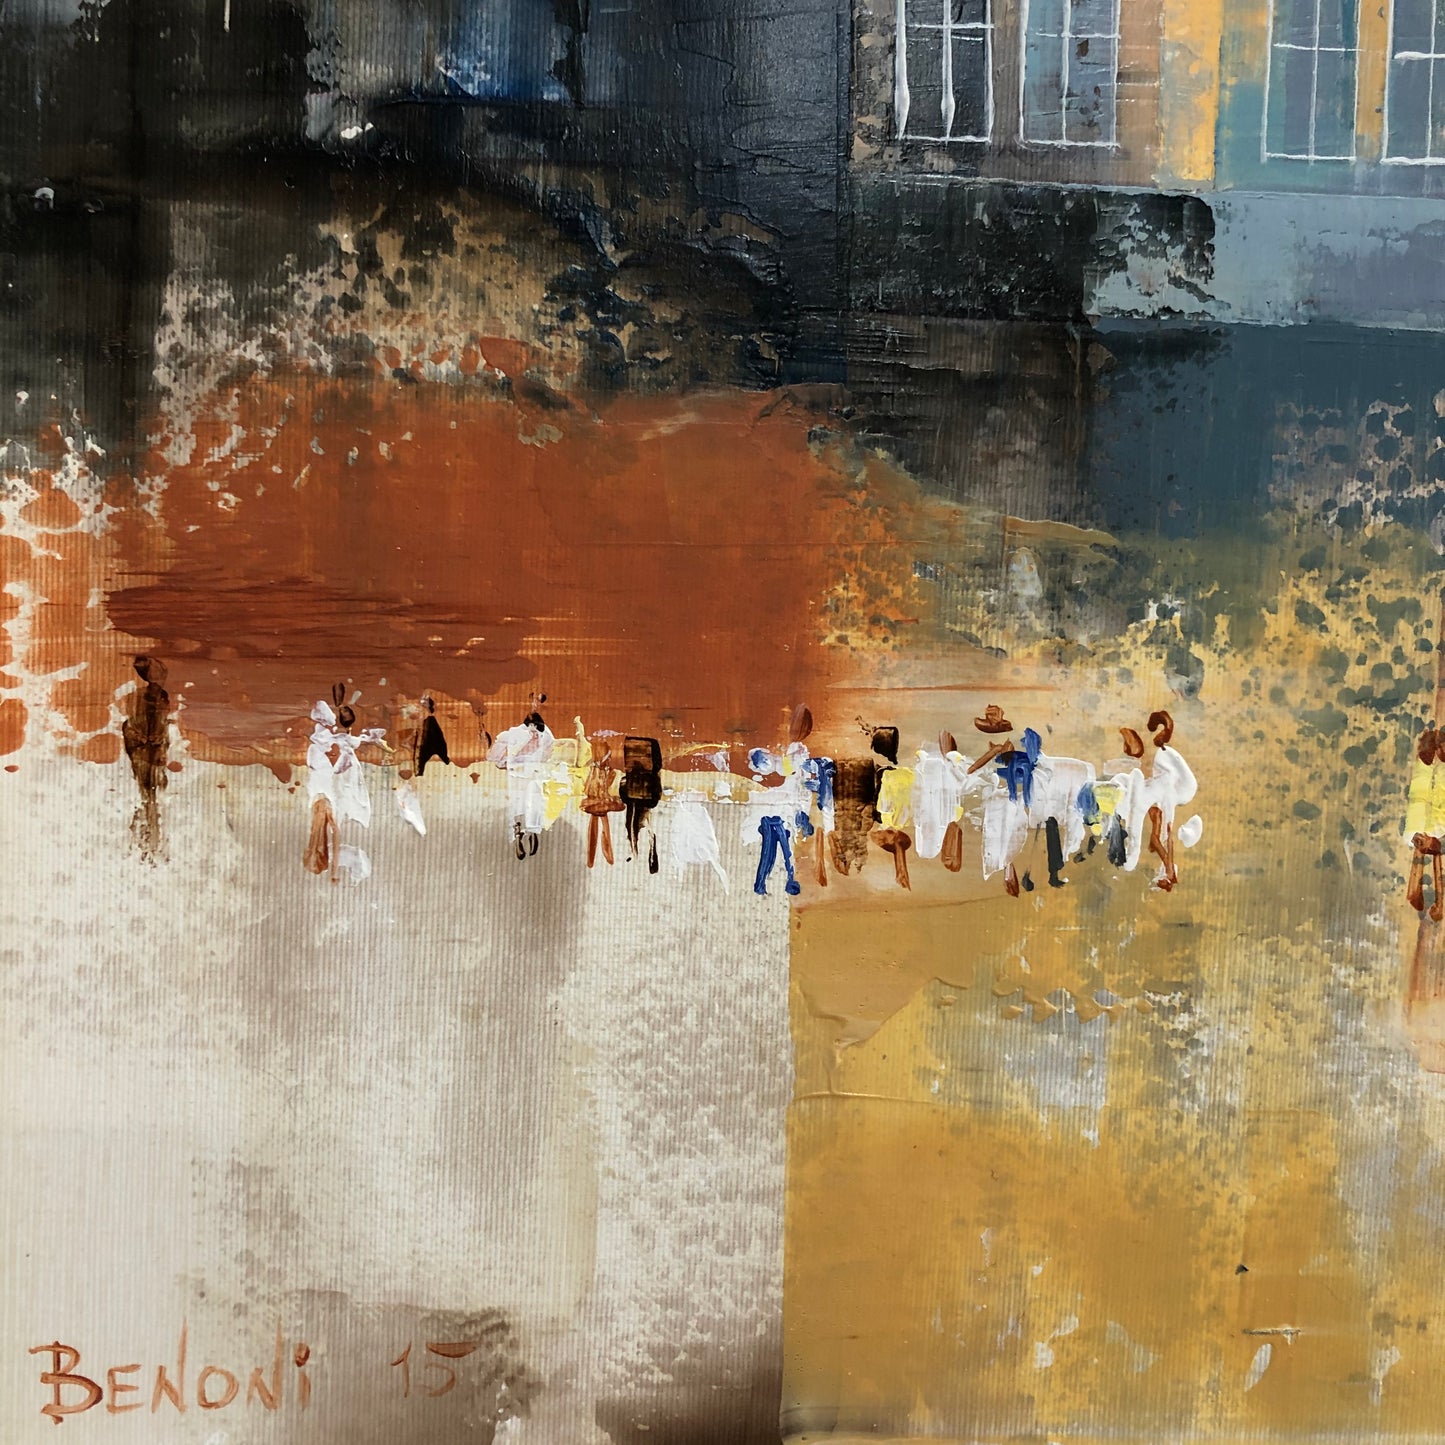 The Golden Hour by Veronika Benoni